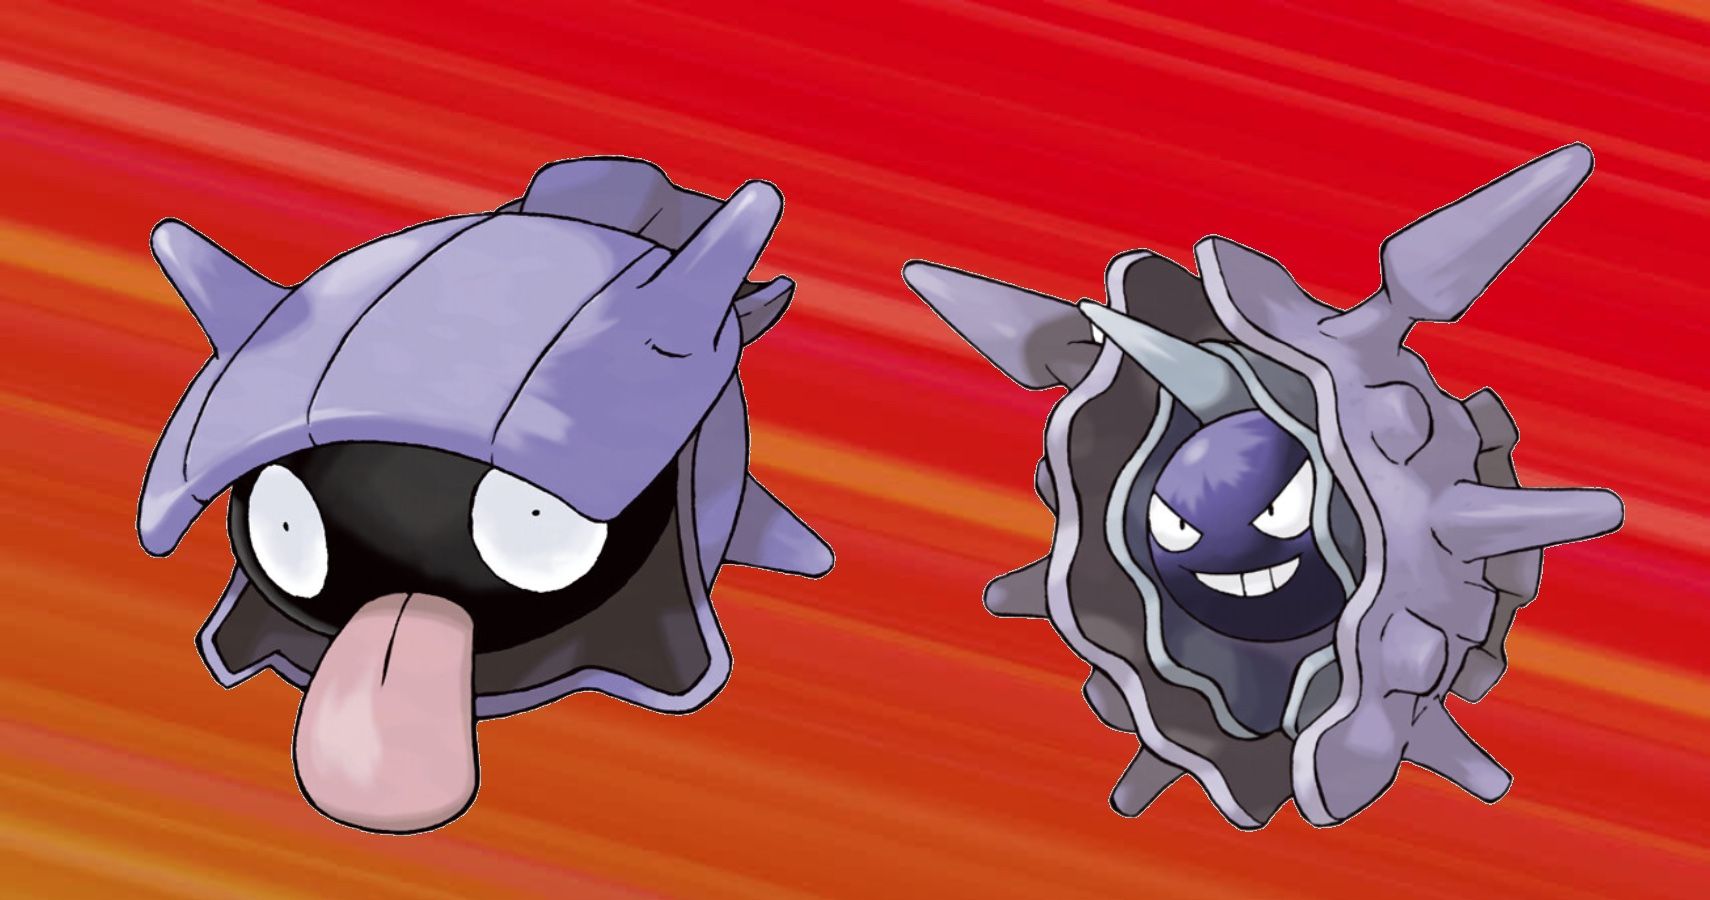 Pokémon Sword & Shield: How To Find & Evolve Shellder Into Cloyster